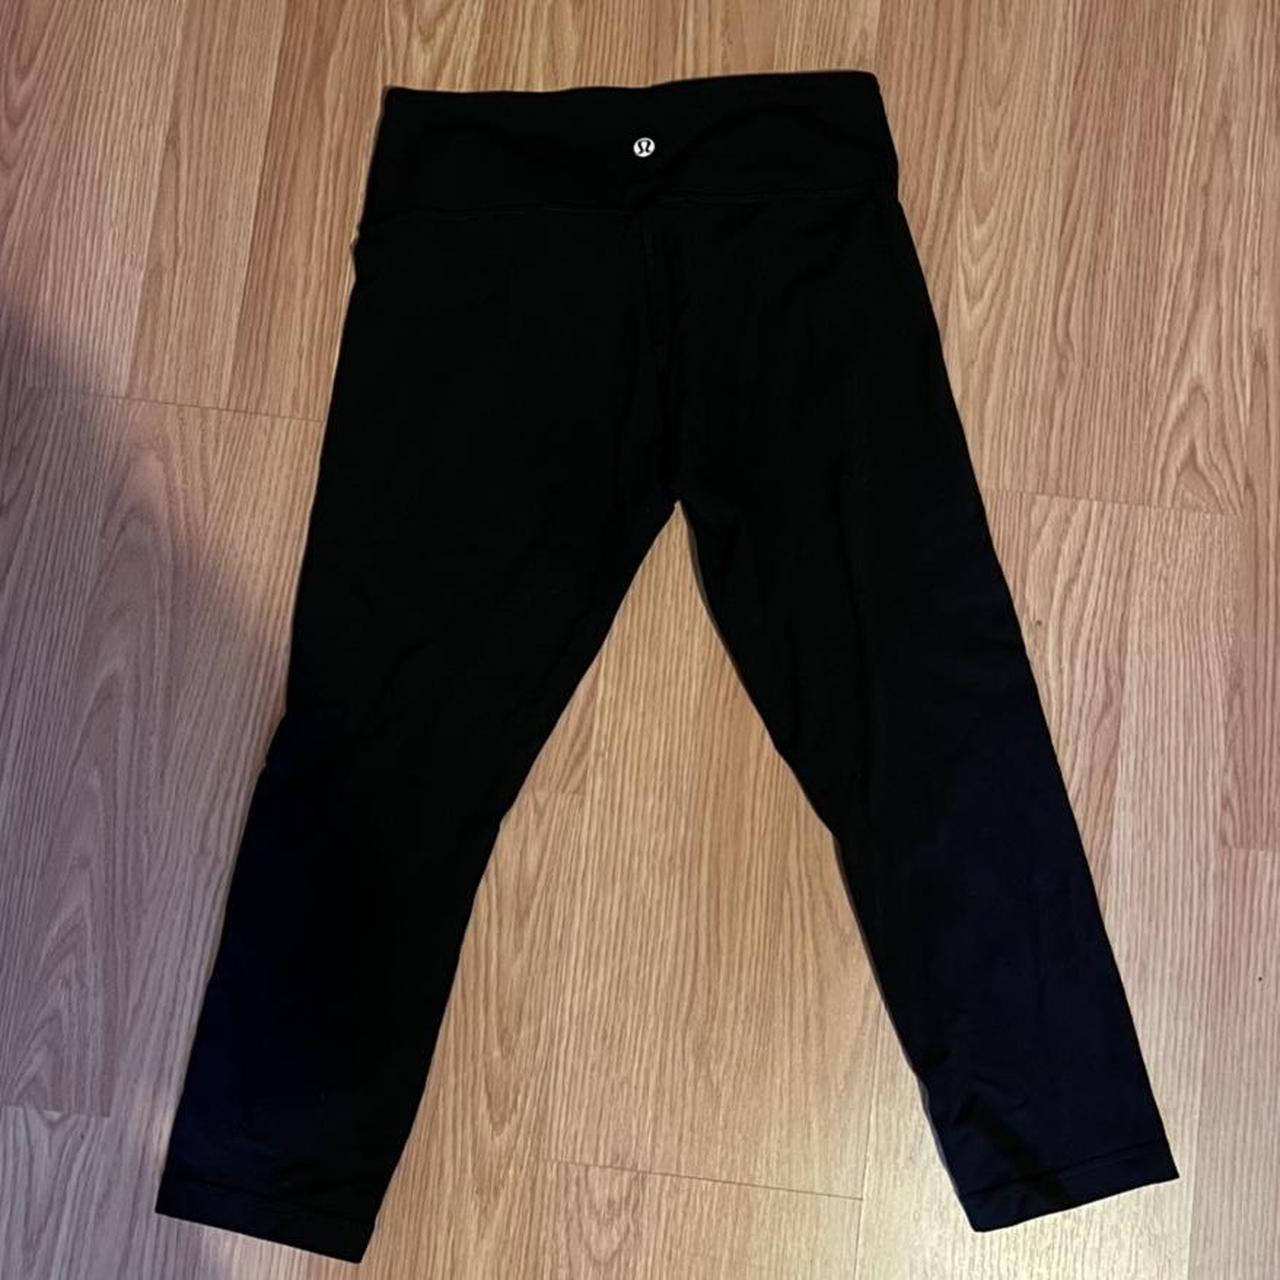 black low-rise lululemon short cut leggings, length